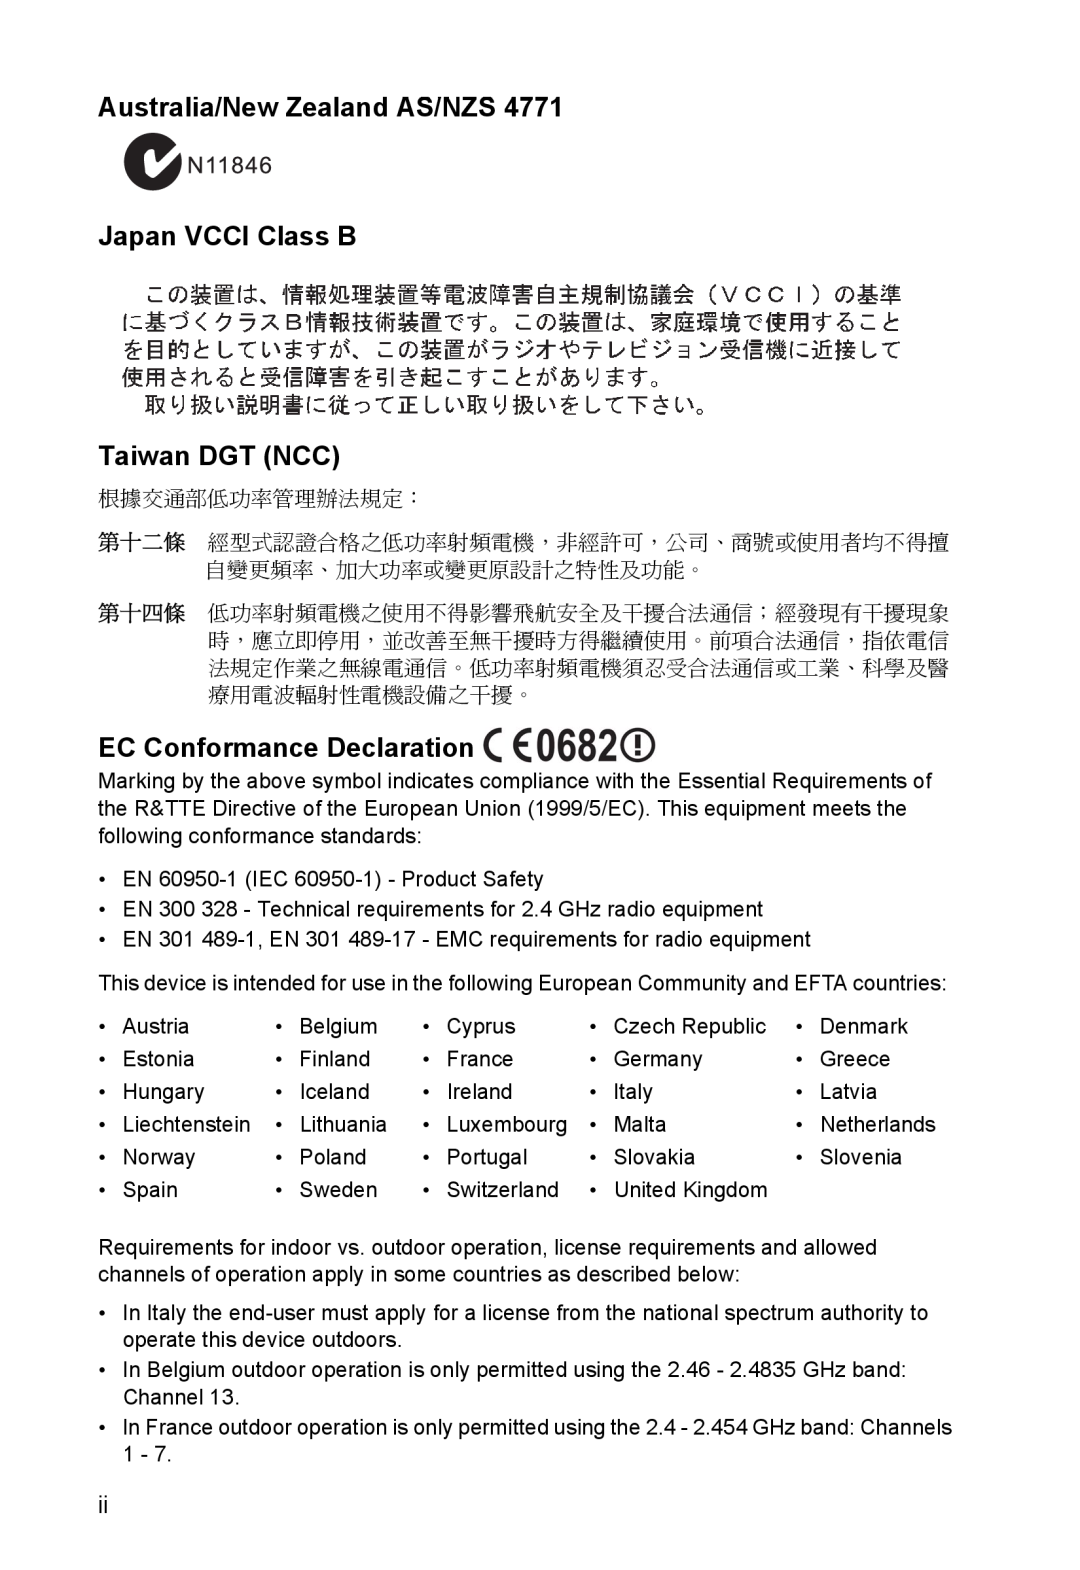 SMC Networks SMCWUSBS-N manual Australia/New Zealand AS/NZS Japan VCCI Class B Taiwan DGT NCC, EC Conformance Declaration 